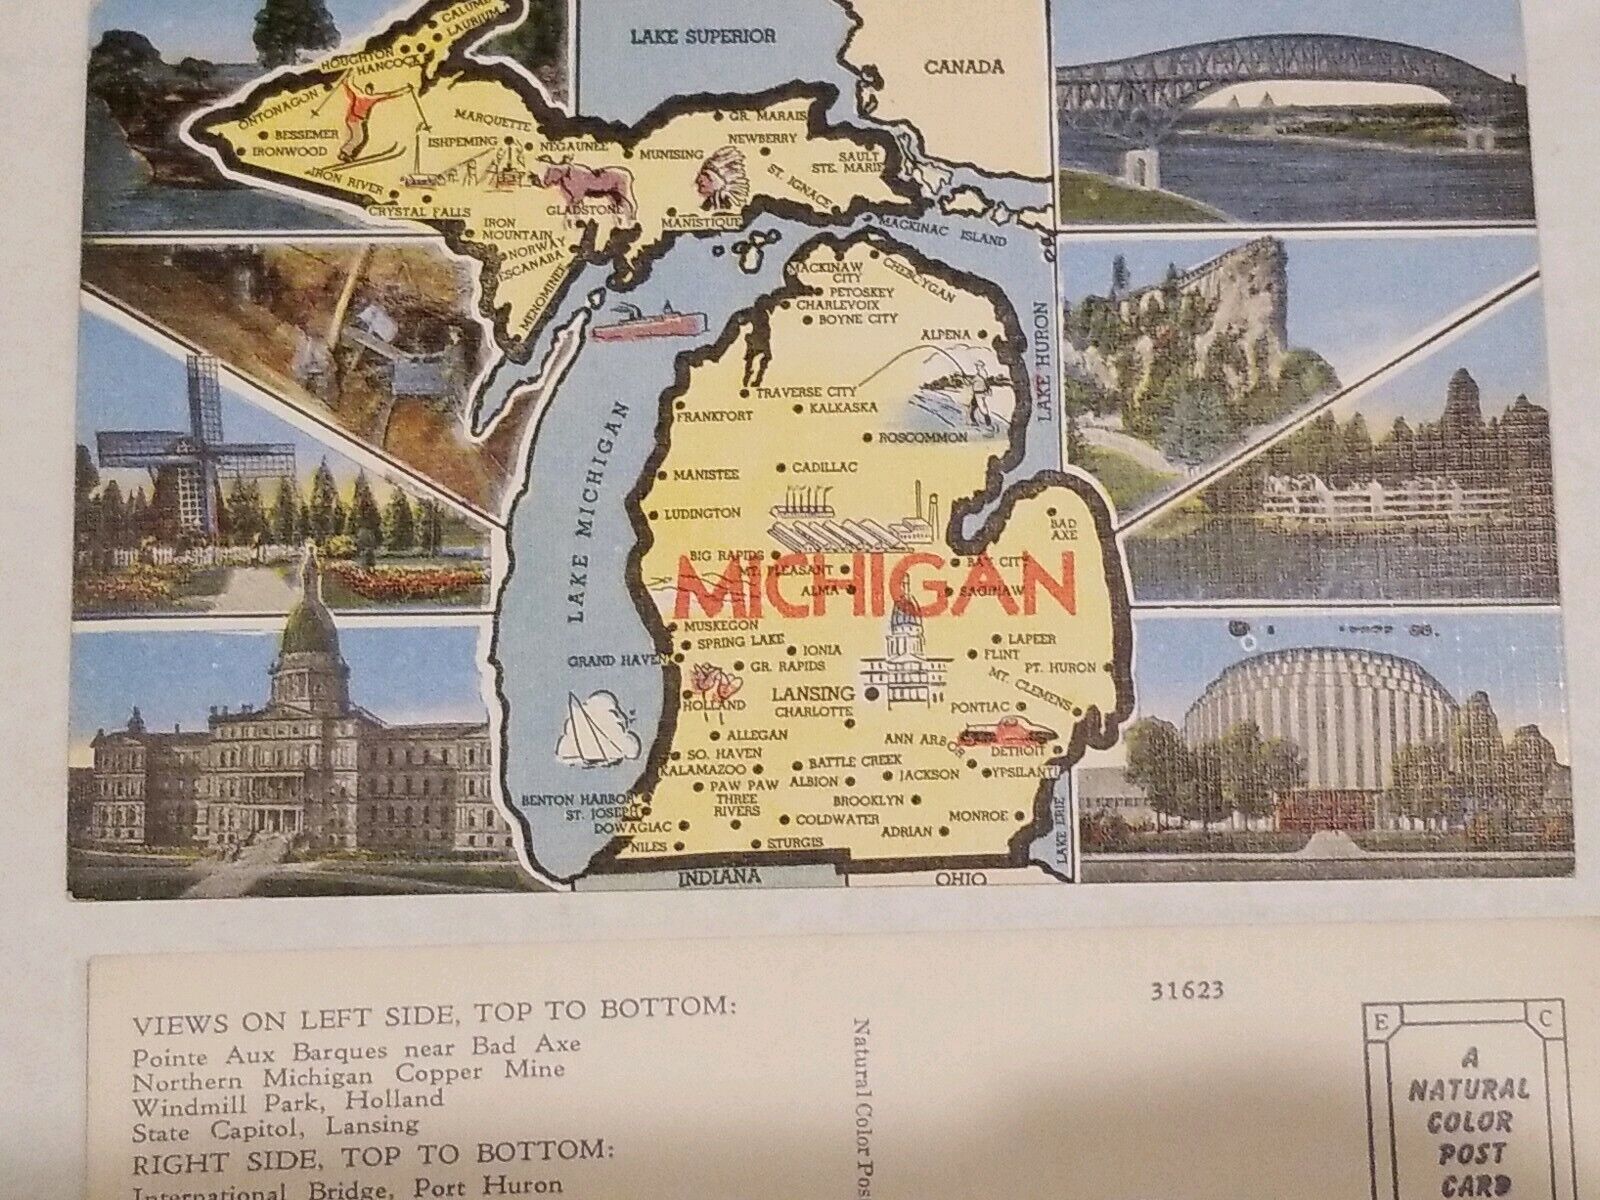 Undated Unused Postcard State of Michigan  Map and LANDMARKS